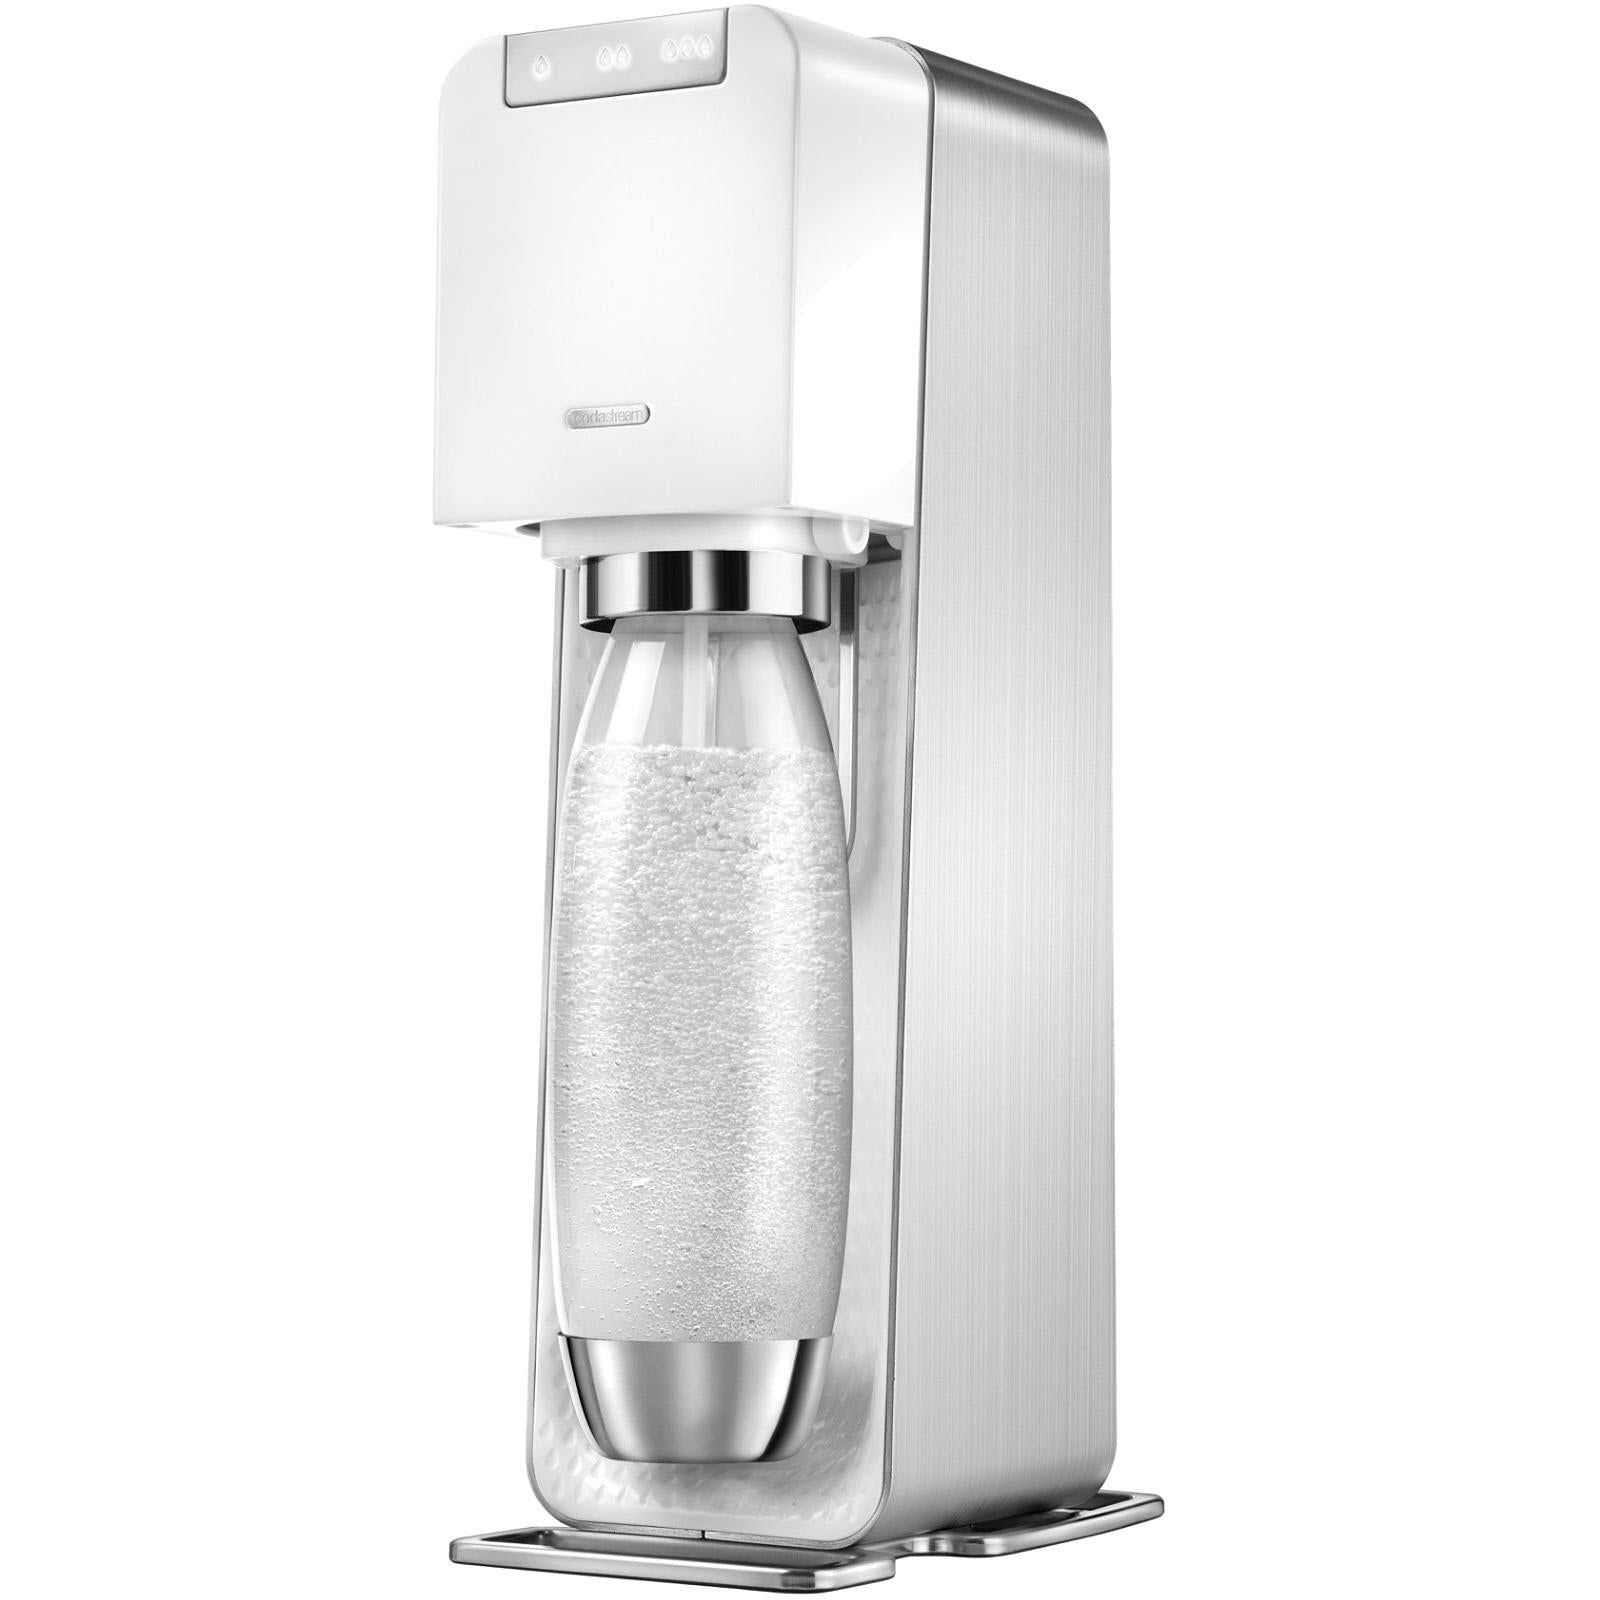 sodastream source power sparkling water maker (white)